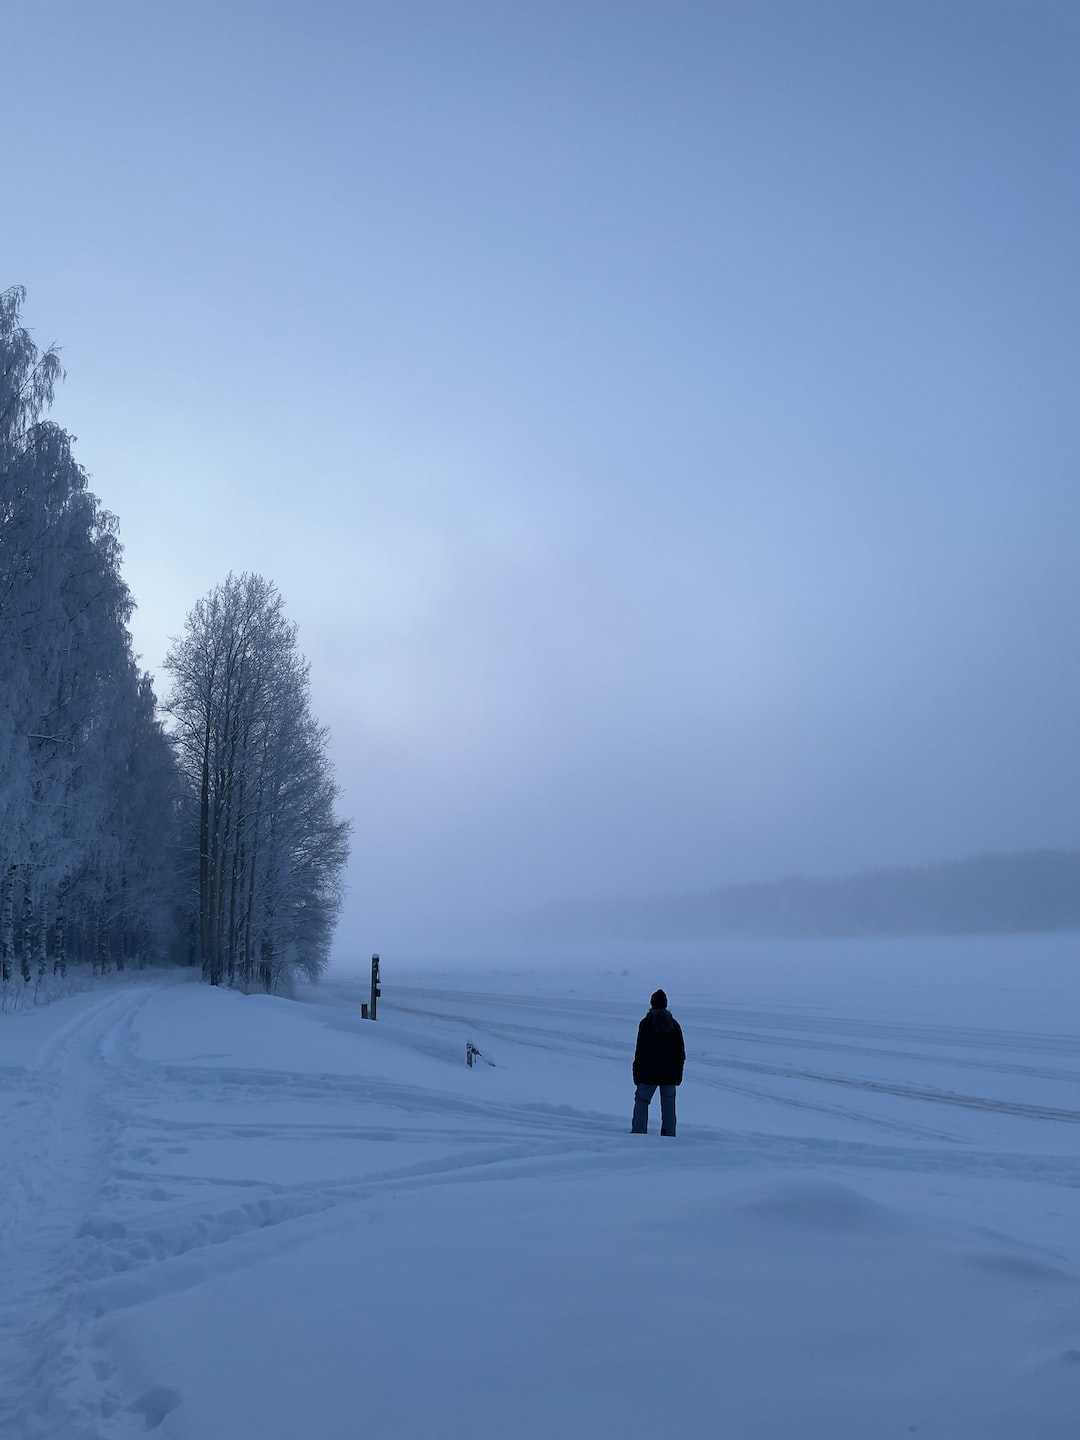 Winter twilight scene from Scandinavia